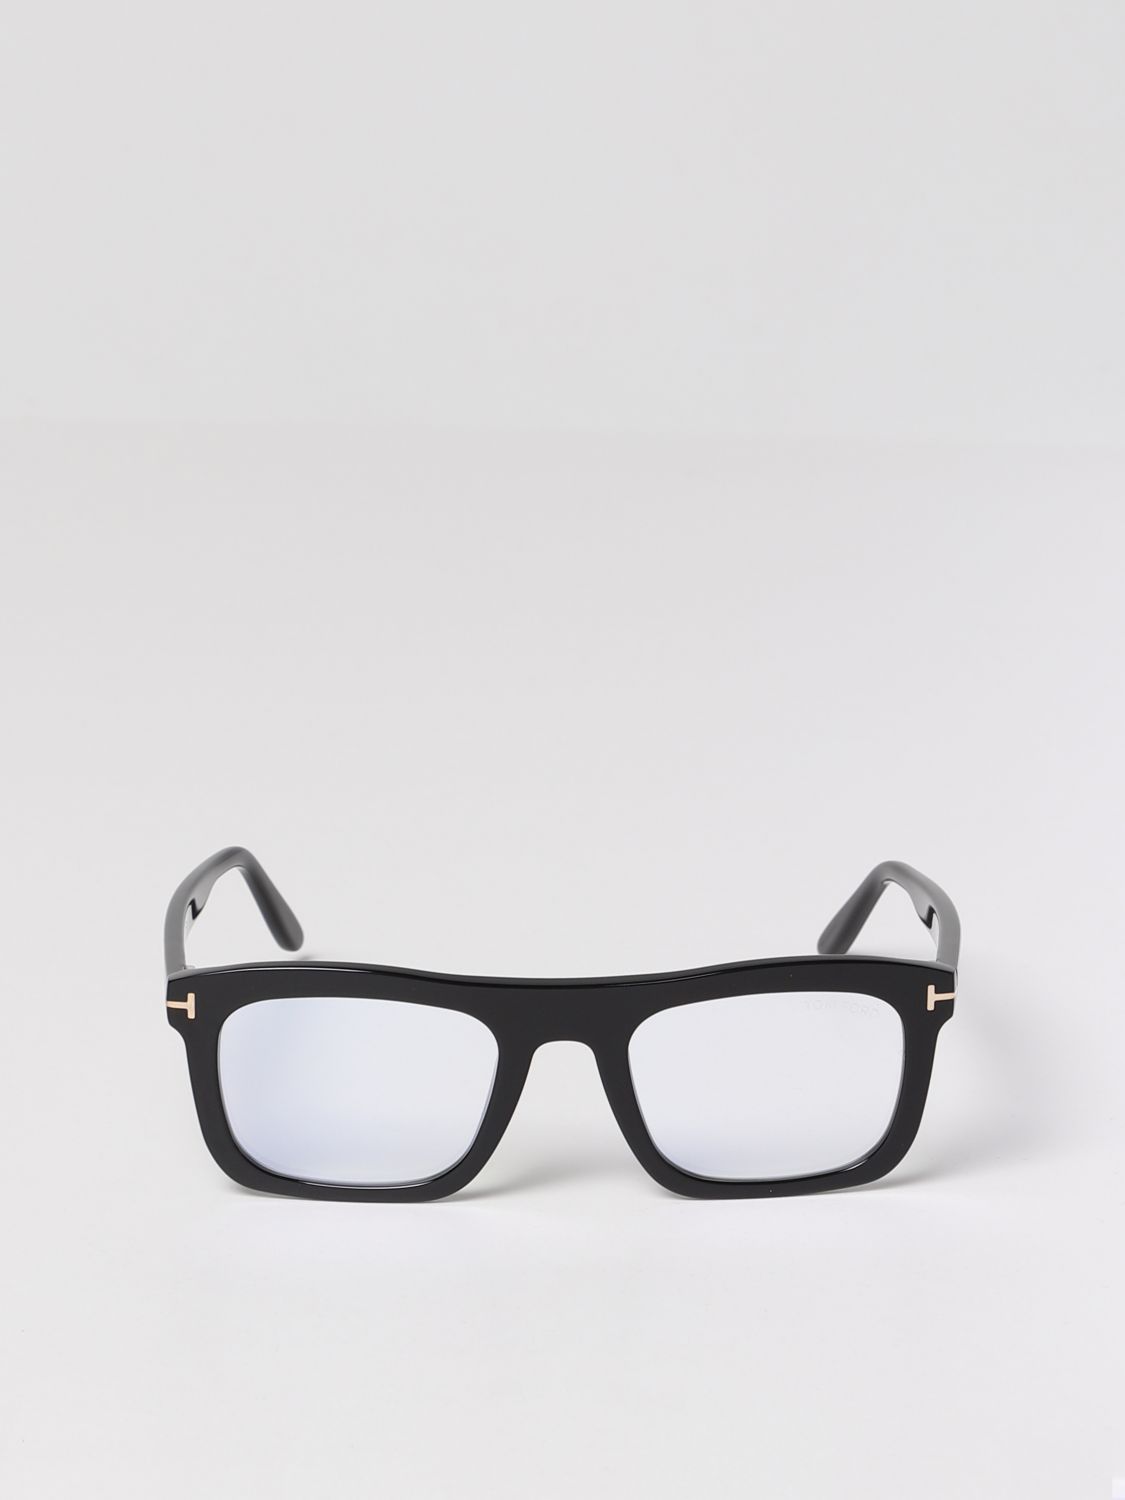 Glasses Tom Ford: TF 5757-B Tom Ford eyeglasses black 2